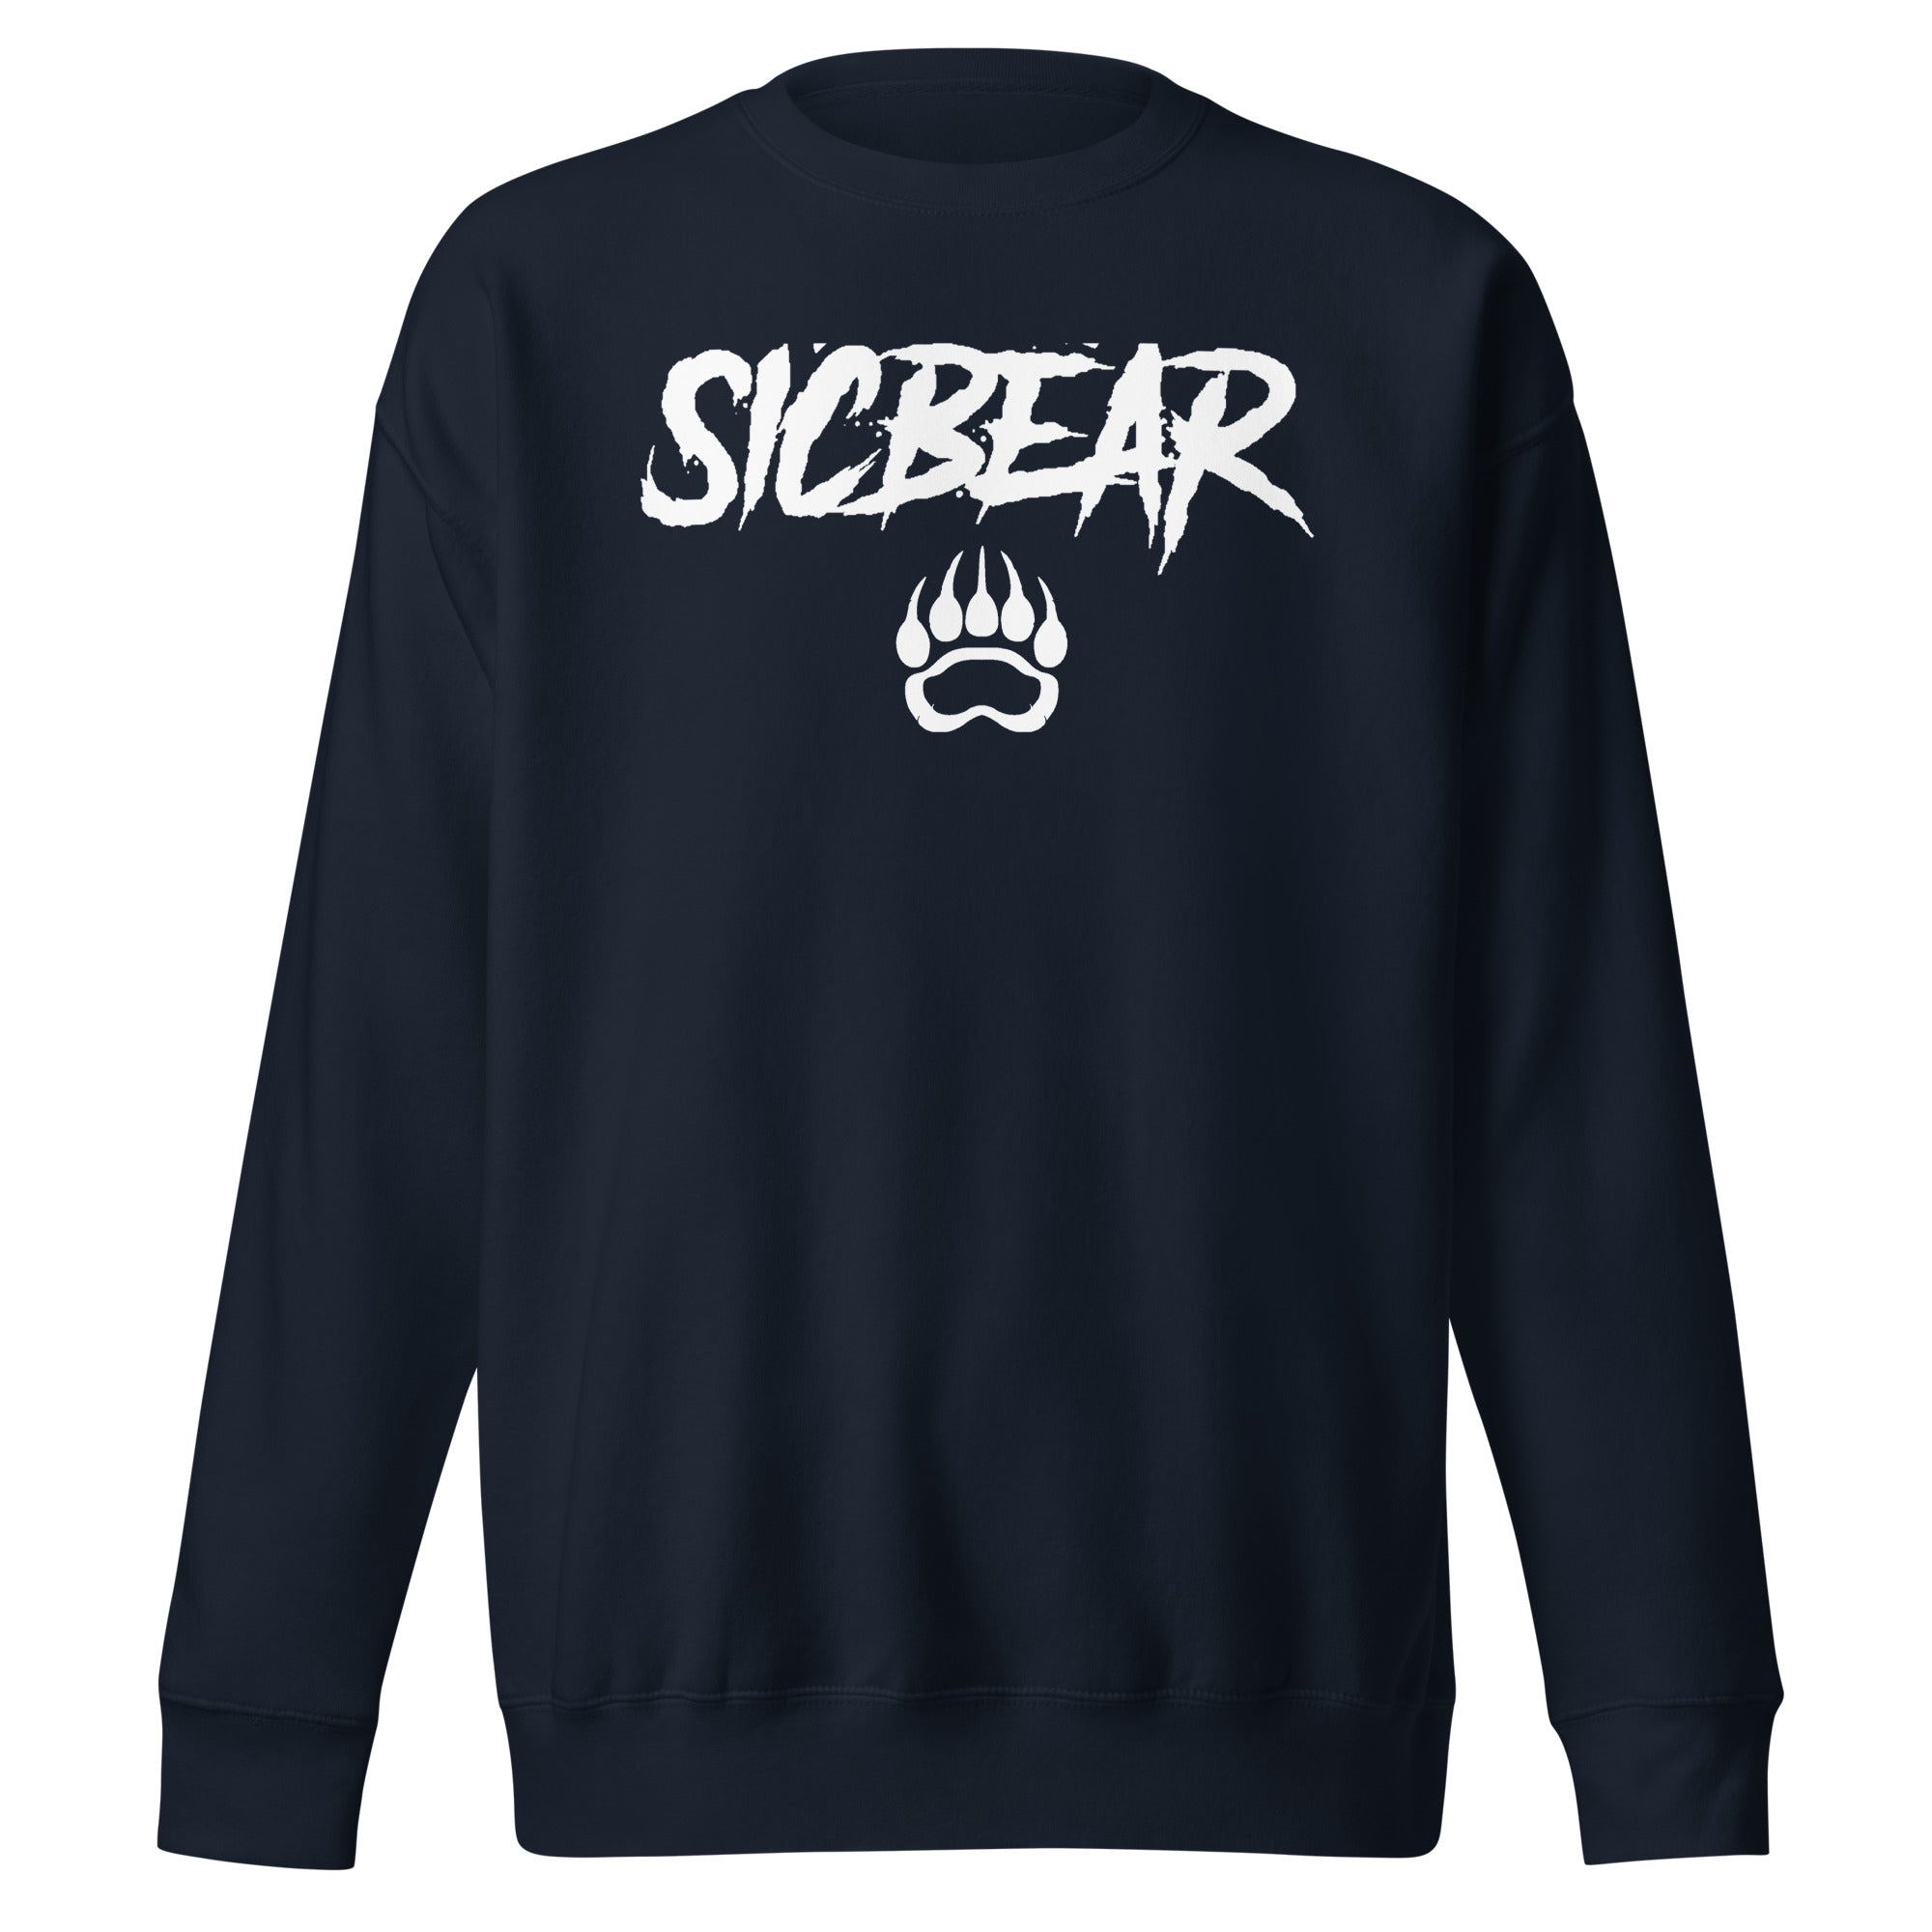 SICBEAR Grizz Sweatshirt w/ White Logos